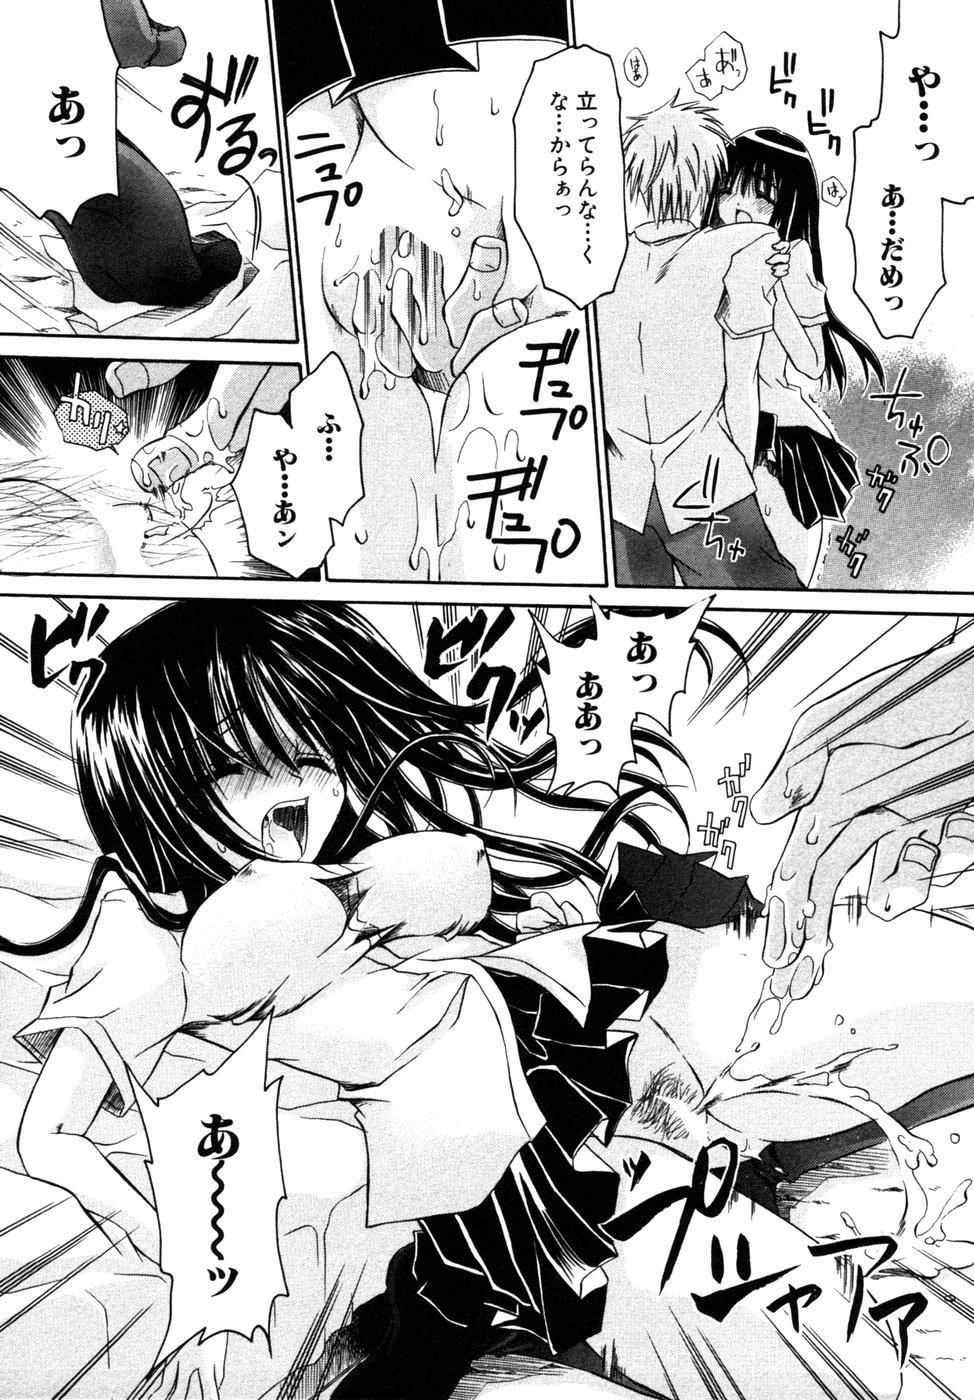 Monster Himitsu no Tobira Vol. 7 Punished - Page 10